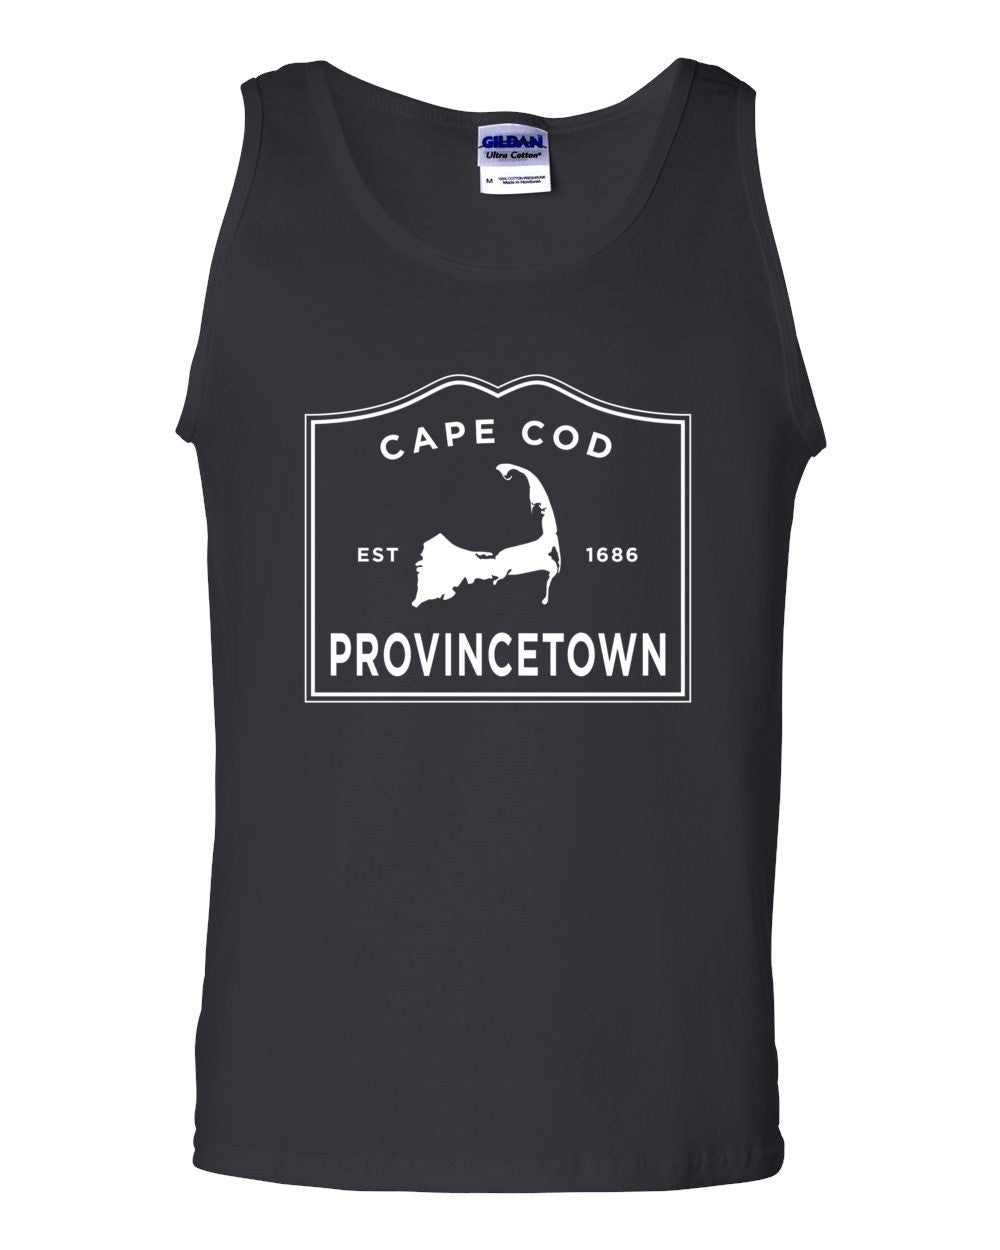 Provincetown Cape Cod Tank Top